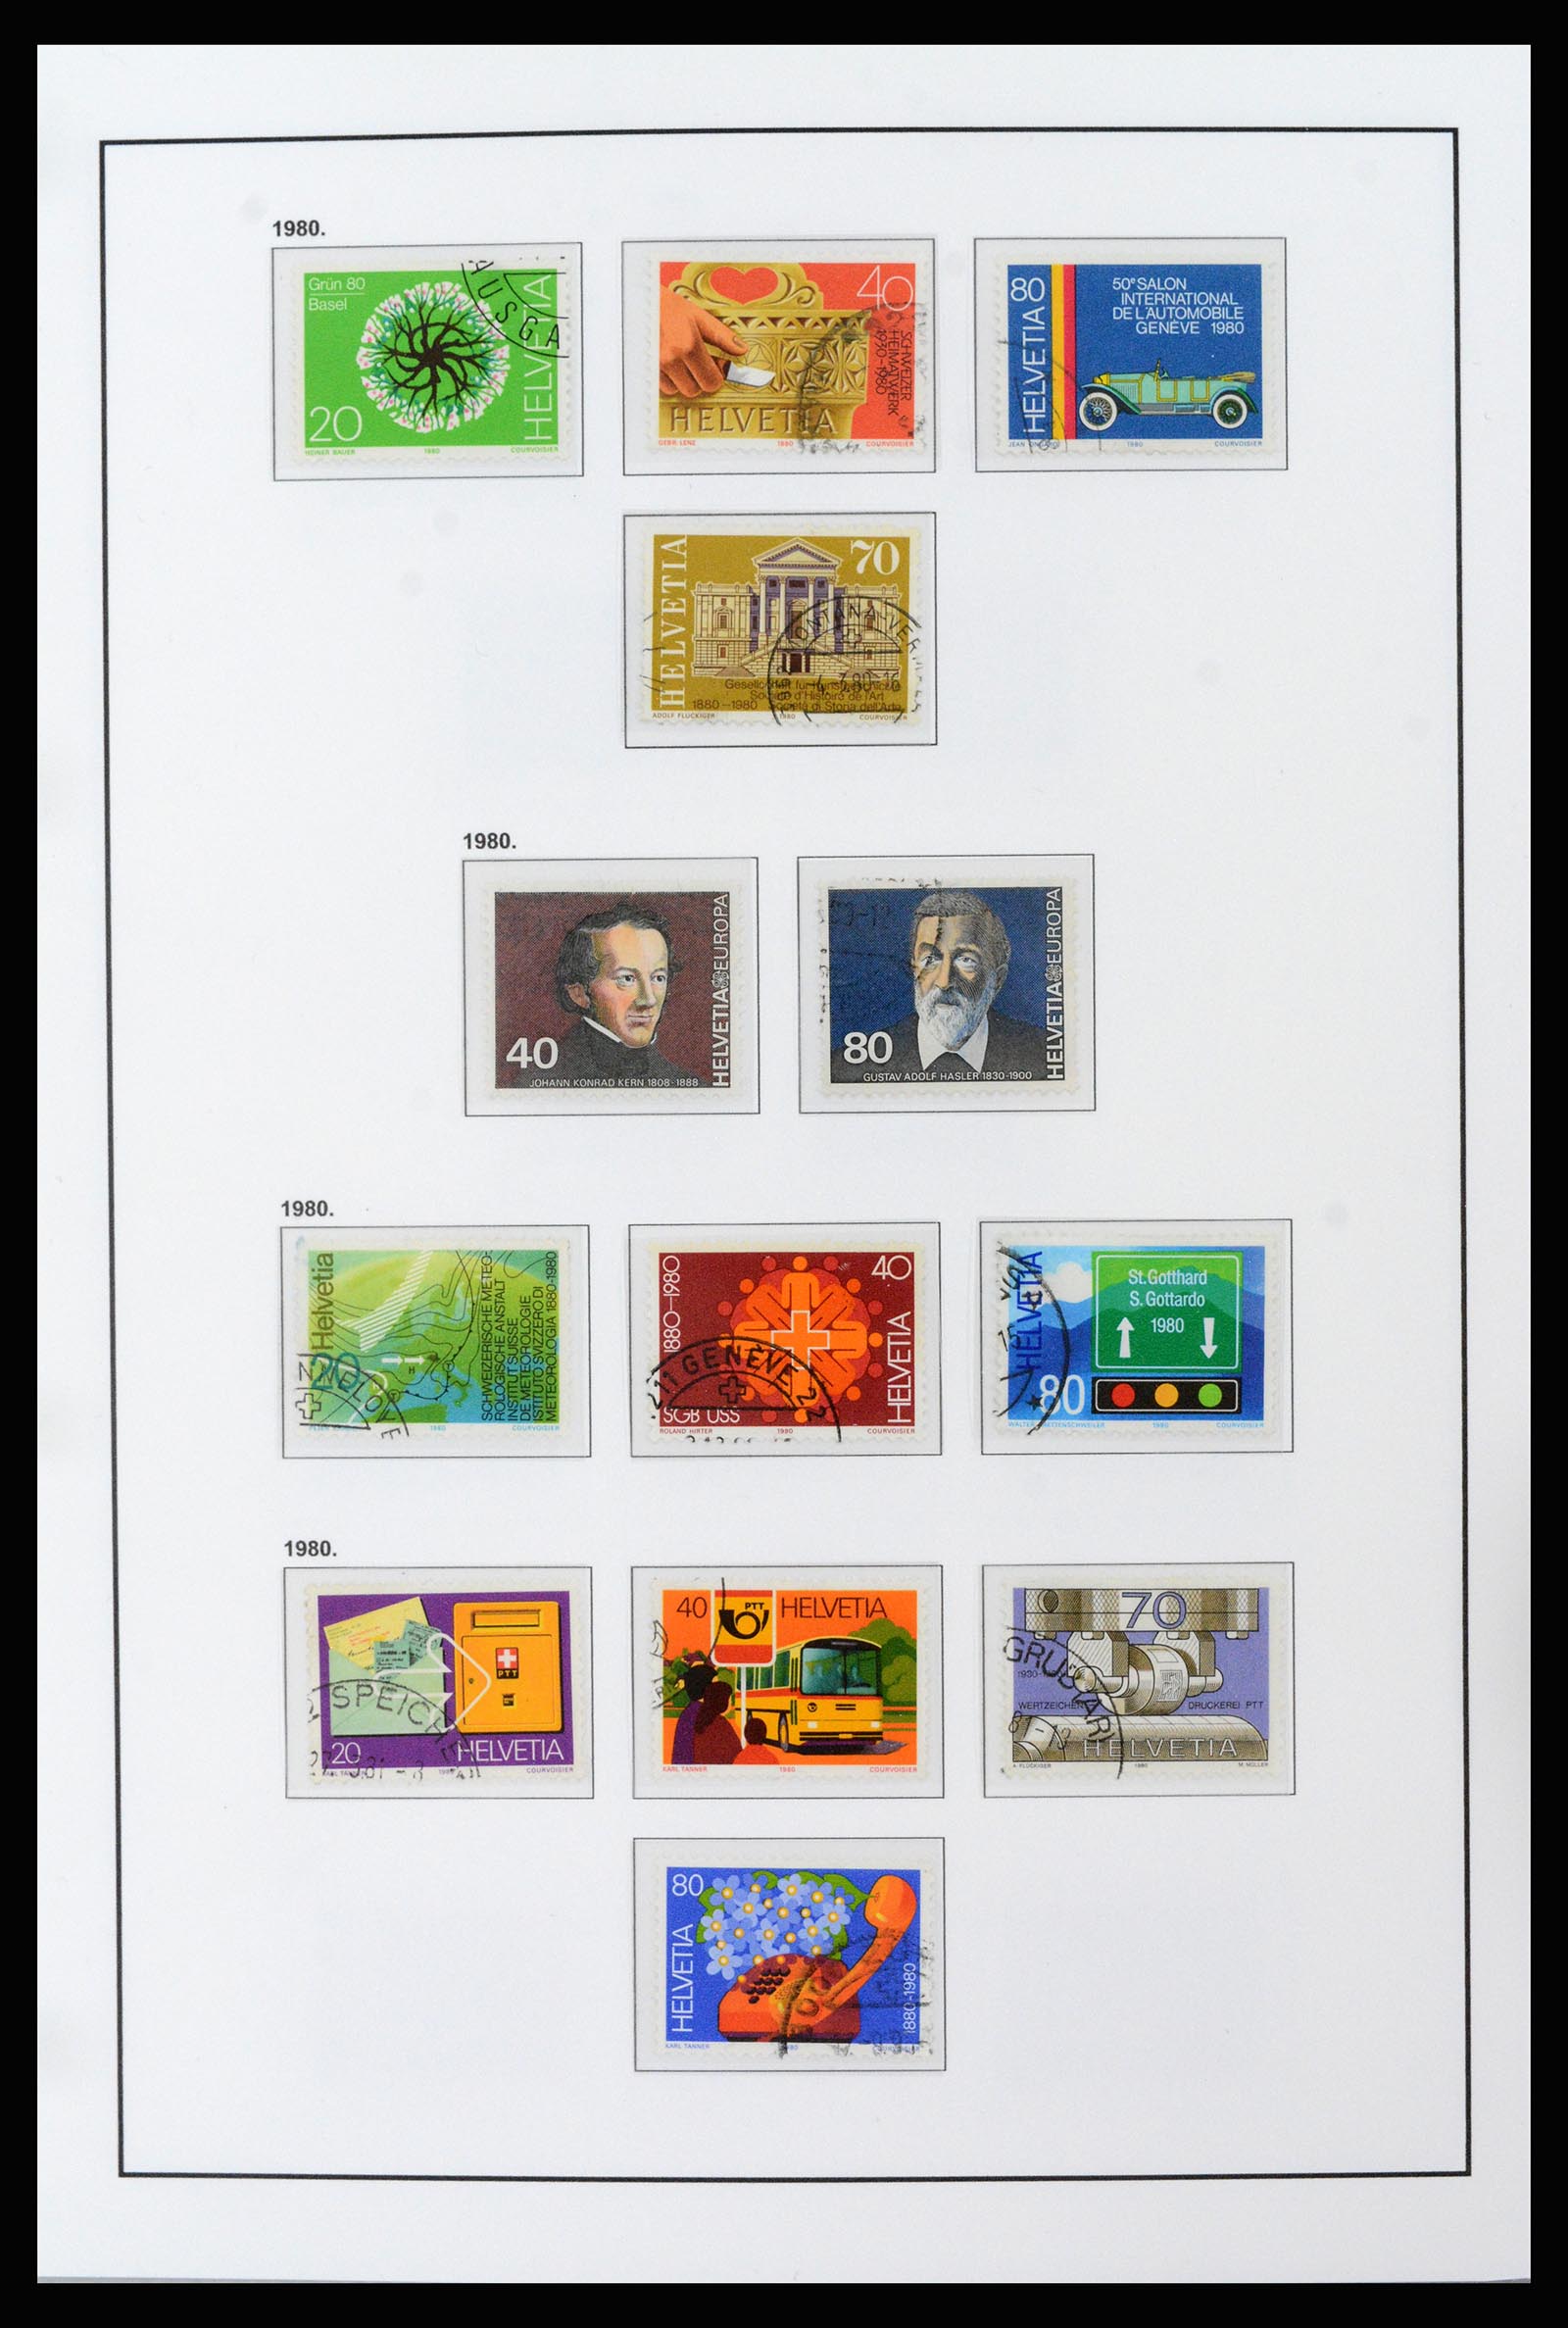 37225 040 - Stamp collection 37225 Switzerland 1854-2020.